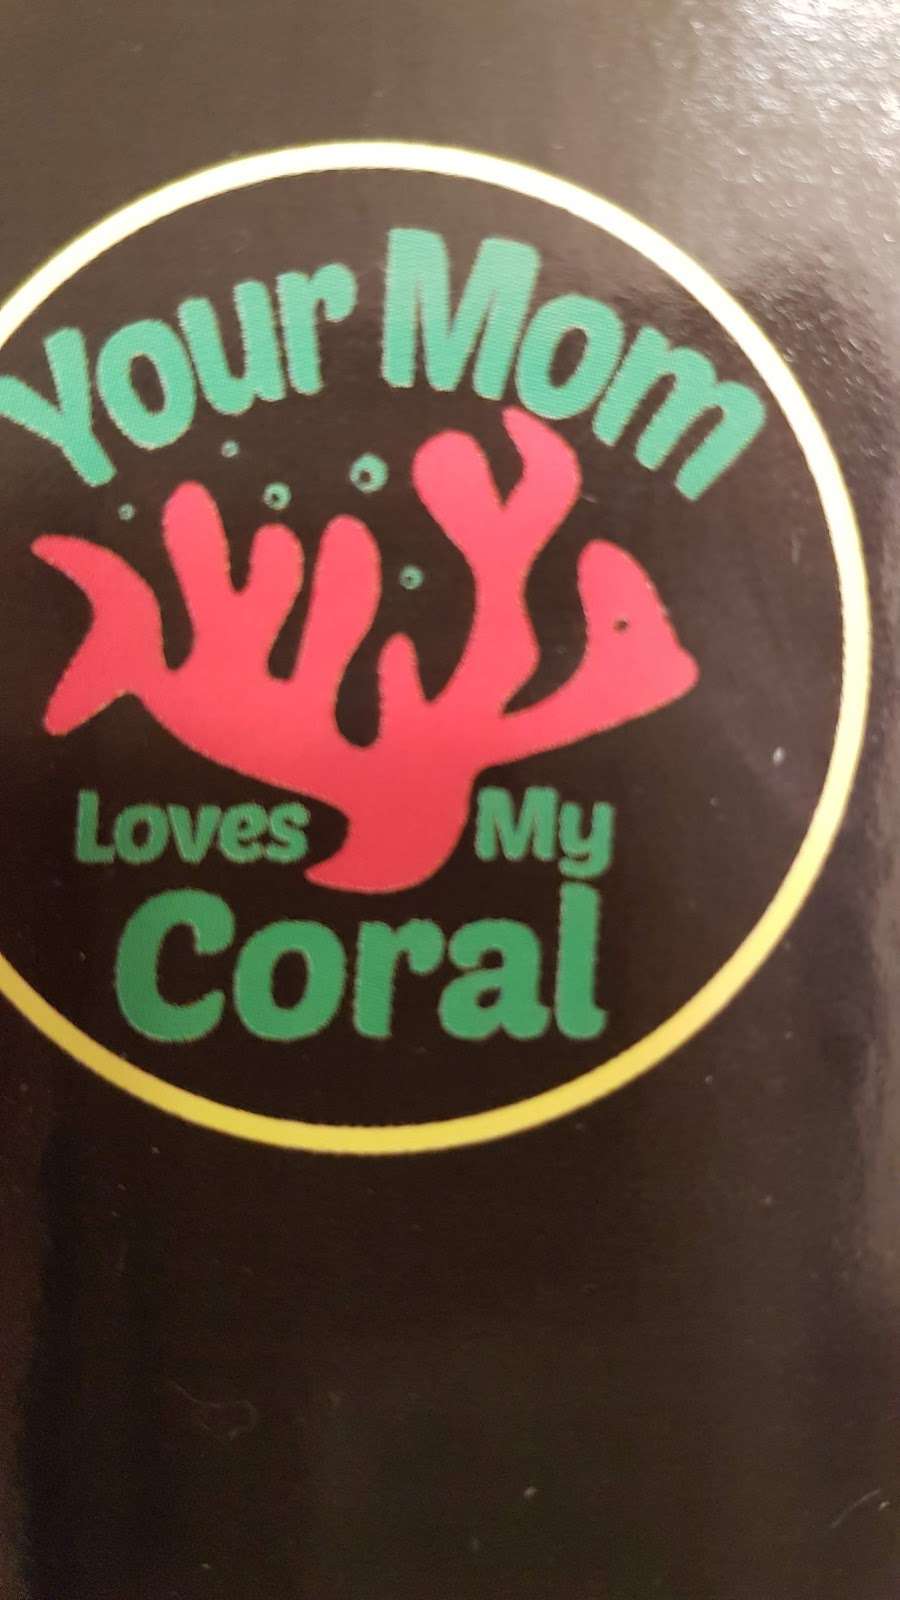 Your Mom Loves My Coral | 2950 S Alma School Rd #14, Mesa, AZ 85202 | Phone: (602) 481-7534